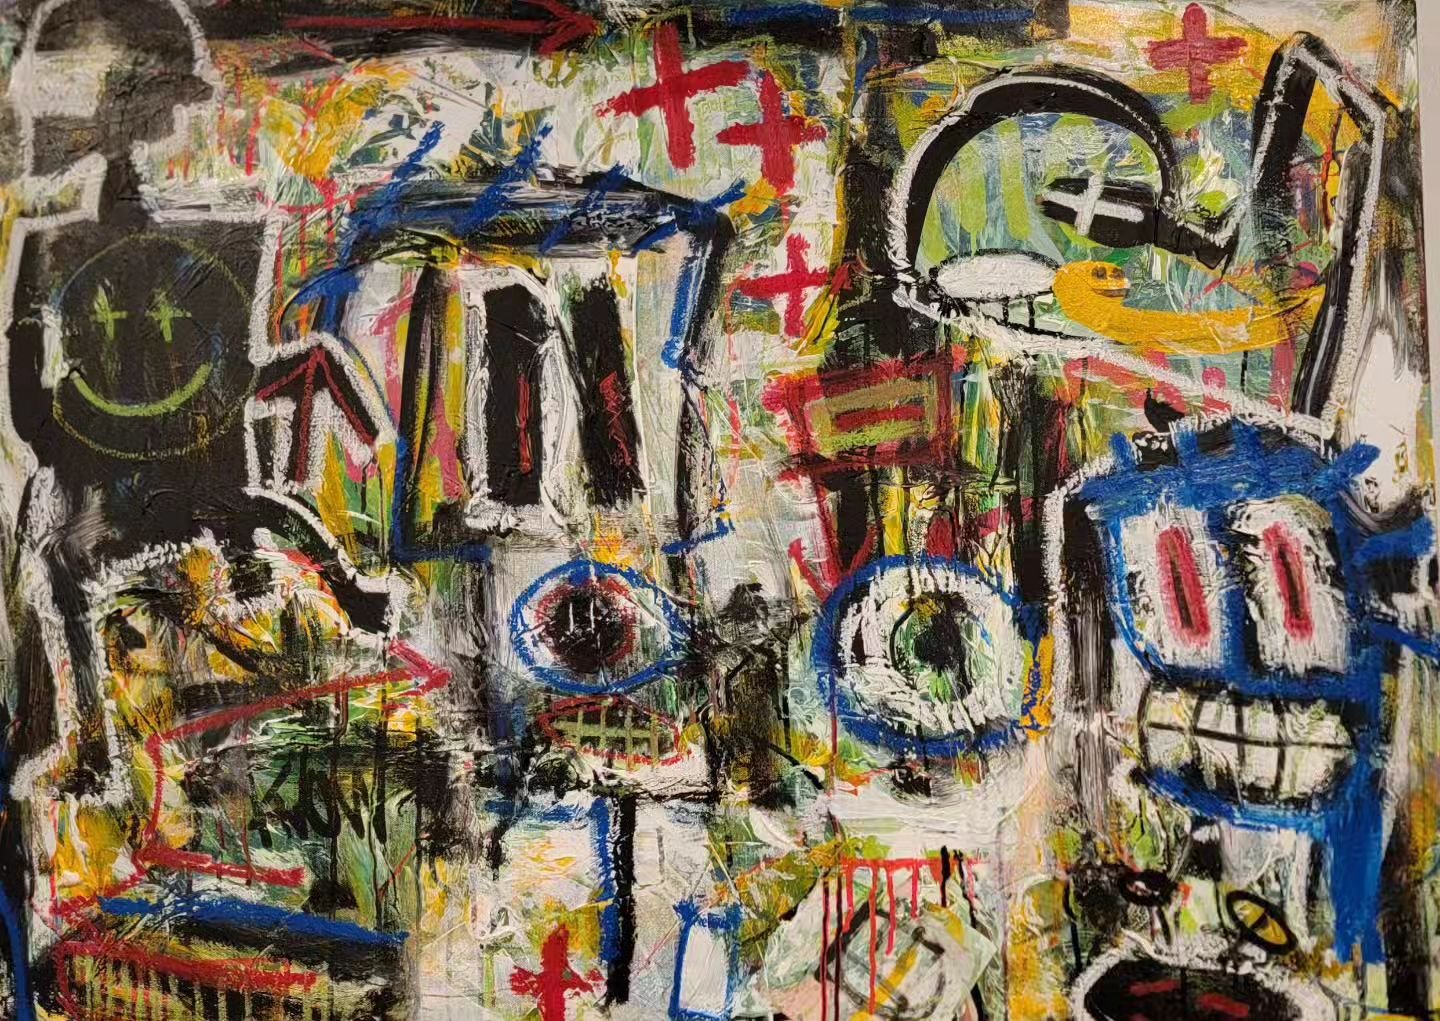 Old Skool
30 x 40 mixed media

#artistsoninstagram #streetart #jasonpikenart #homedecor #loft #nyc #nycart #abstractartist #multilayer #basquiat #jeanmichelbasquiat
#antifragile